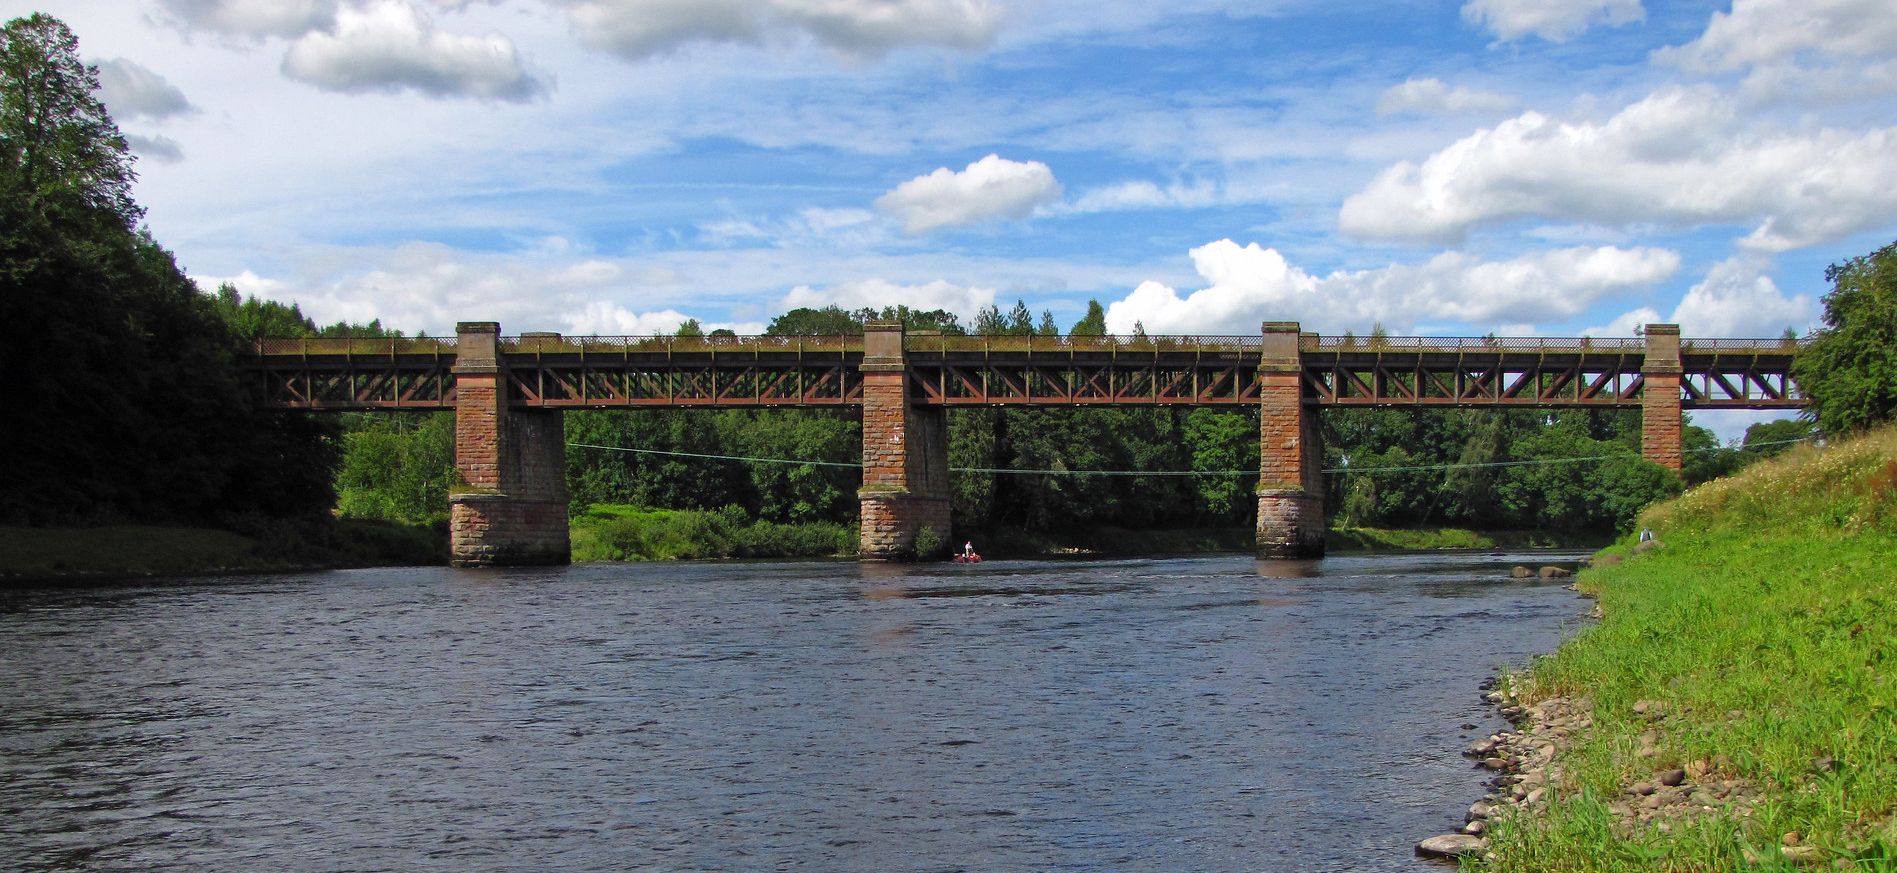 Former Railway bridge over the River Tay near Cargill